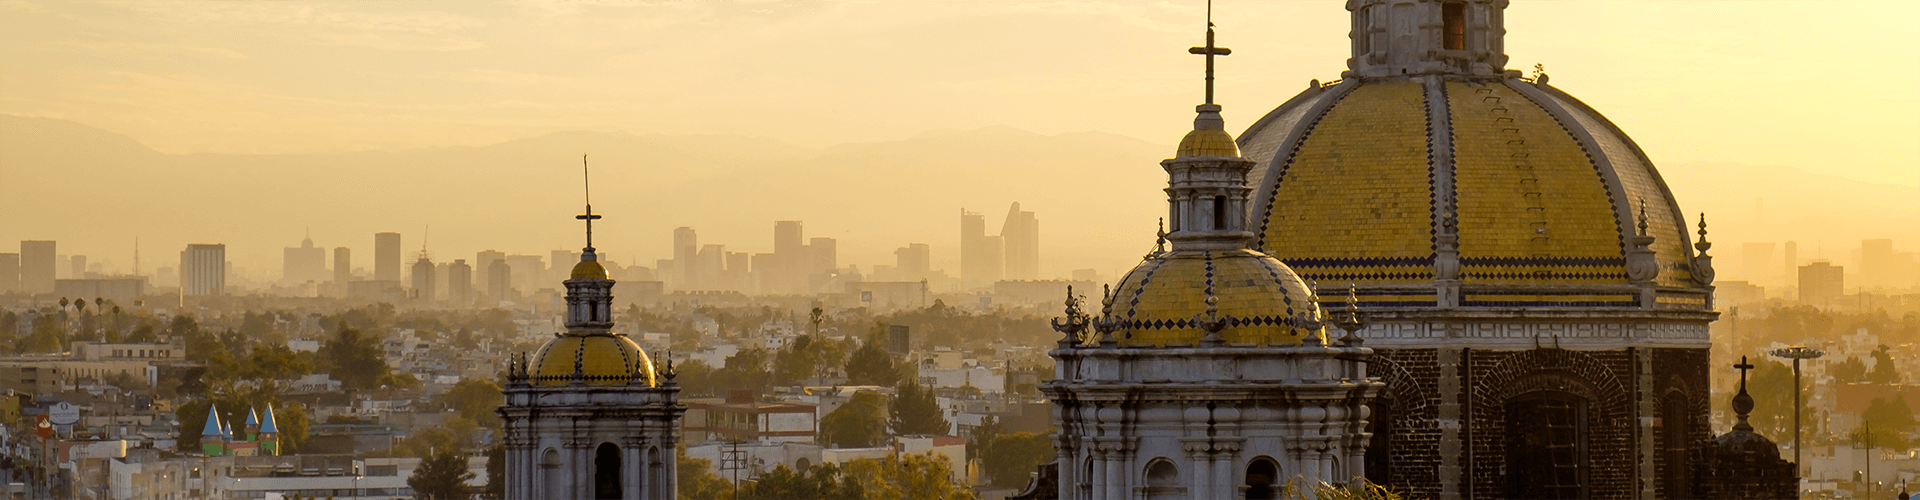 Mexico City Benito Juarez International